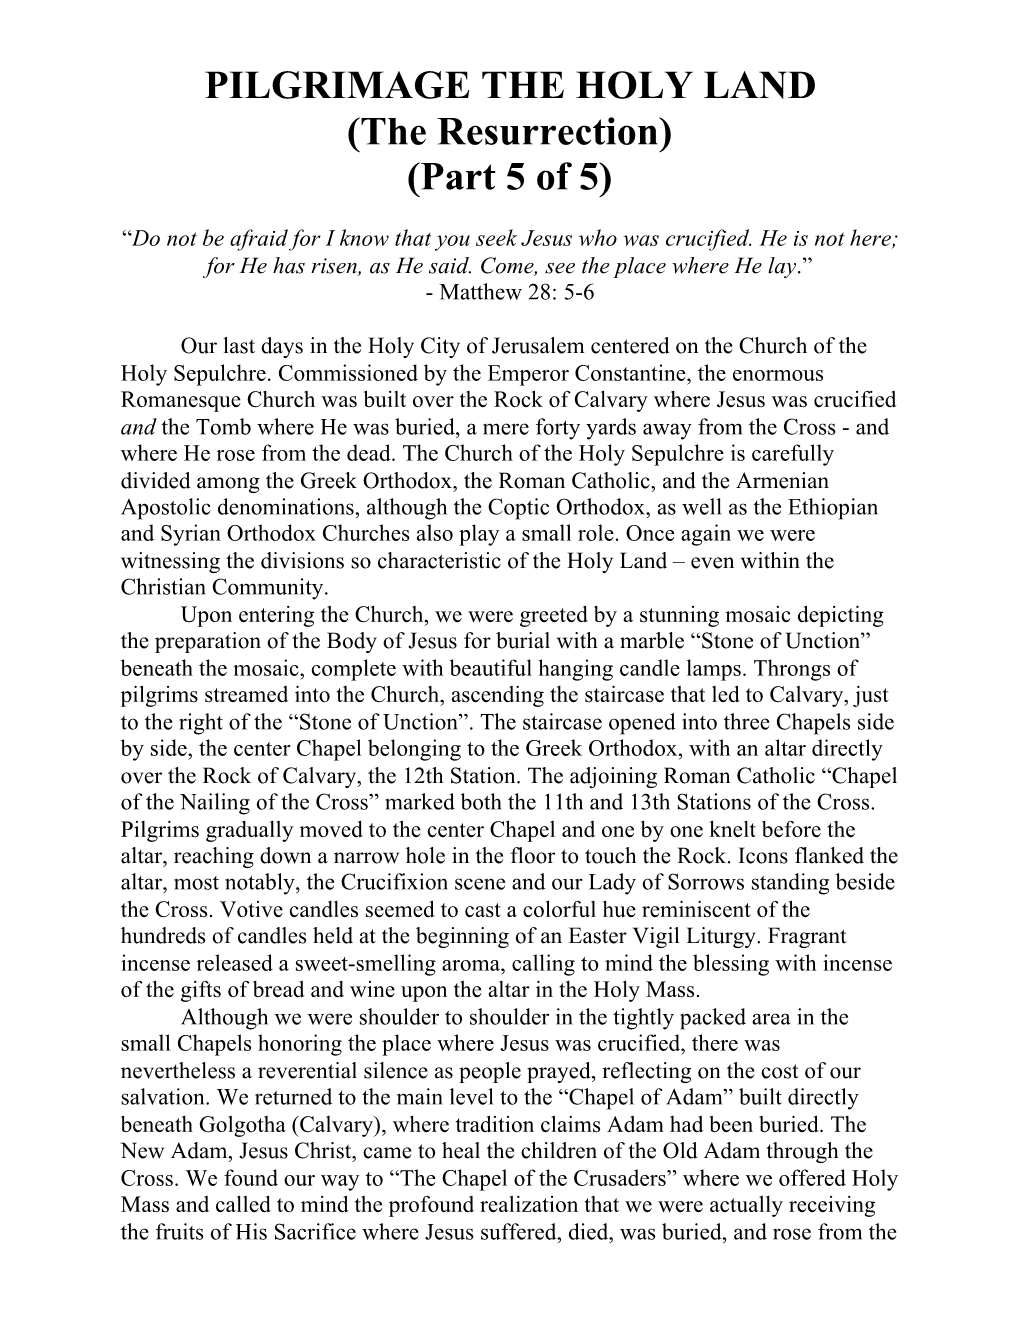 PILGRIMAGE the HOLY LAND (The Resurrection) (Part 5 of 5)